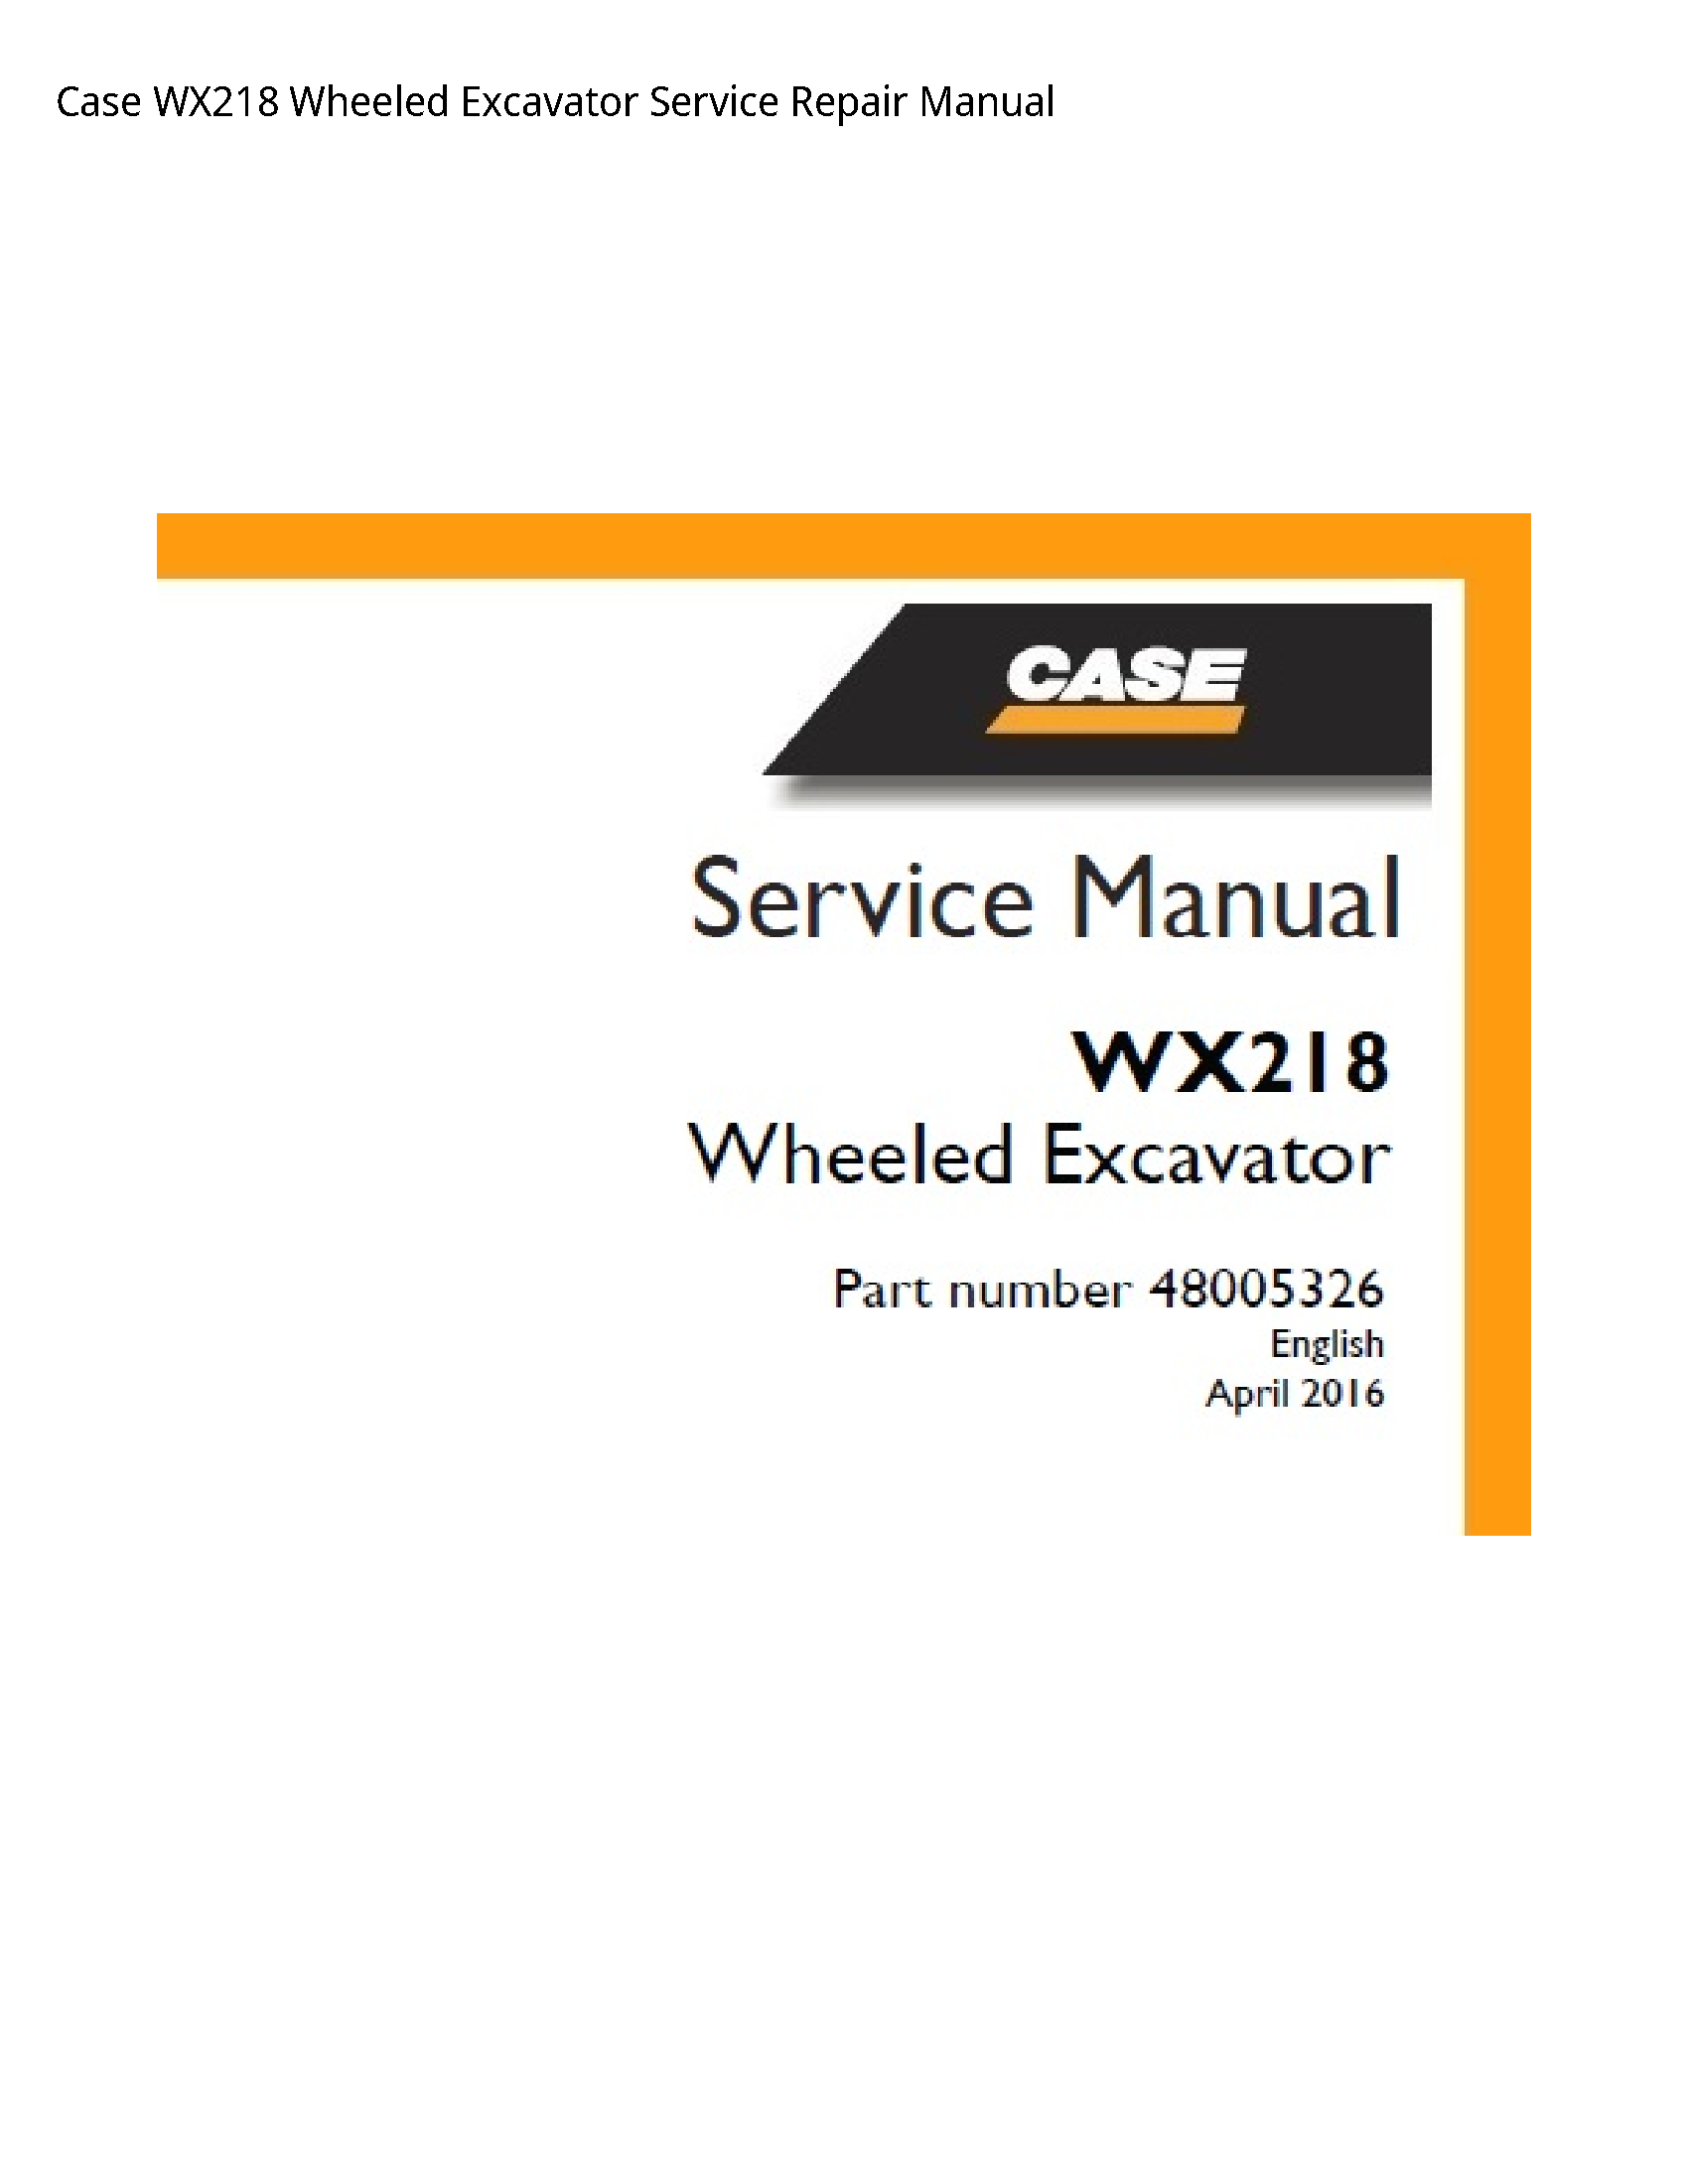 Case/Case IH WX218 Wheeled Excavator manual